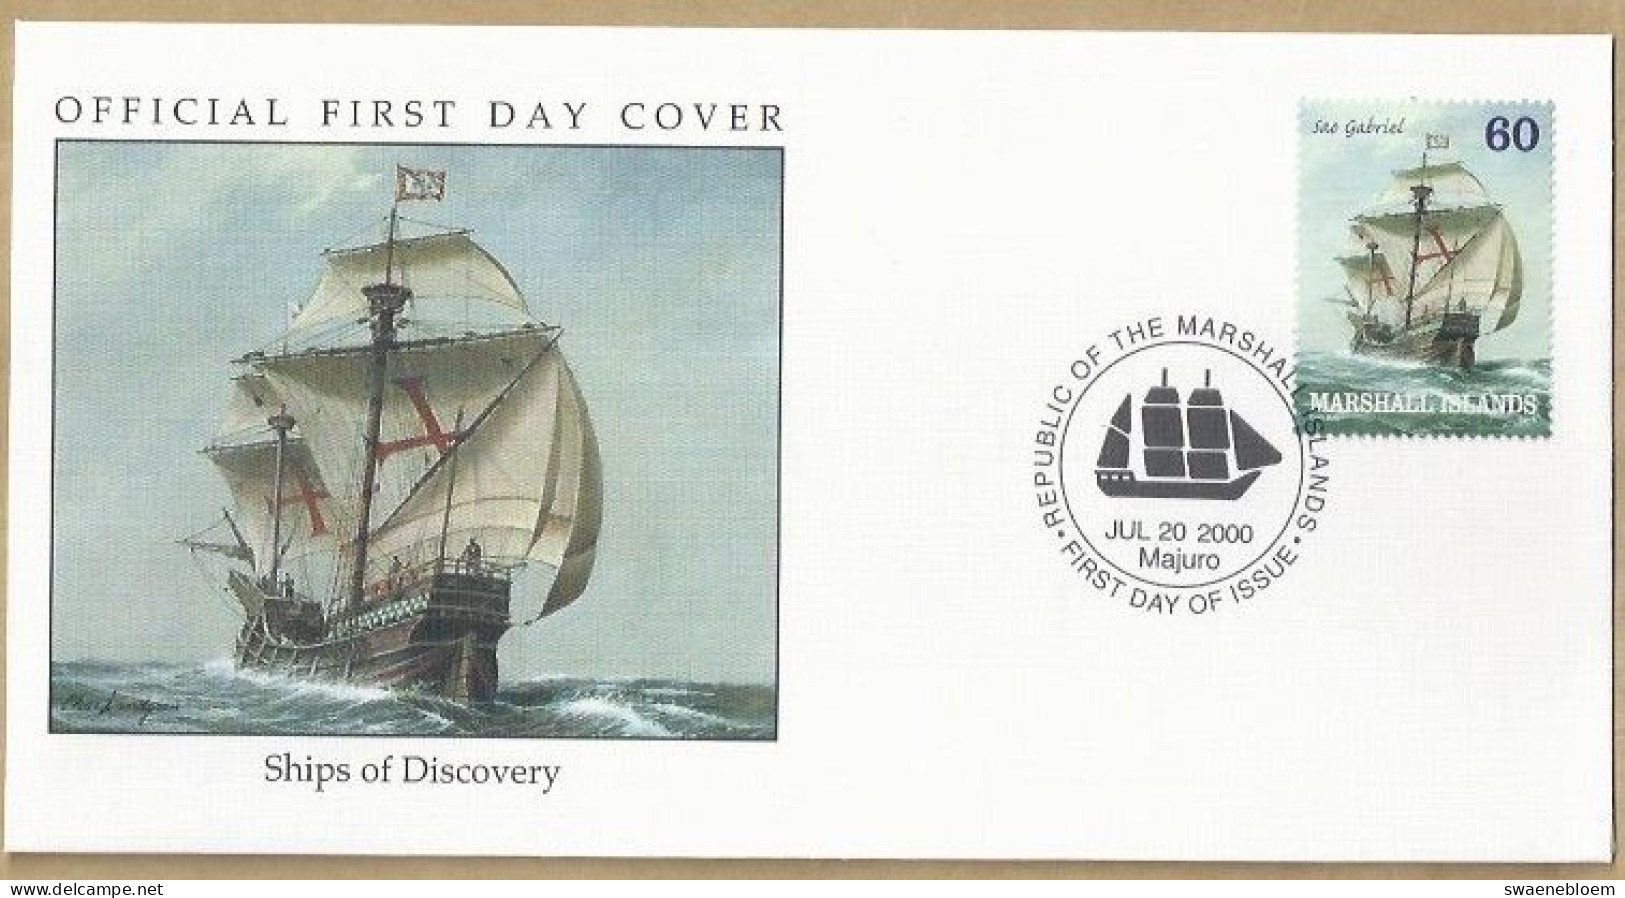 FDC. REPUBLIC OF THE MARSHALL ISLANDS. JUL 20 2000 MAJURO. SHIPS OF DISCOVERY. SAO GABRIEL. C163.FDC. (6-6). - Marshall